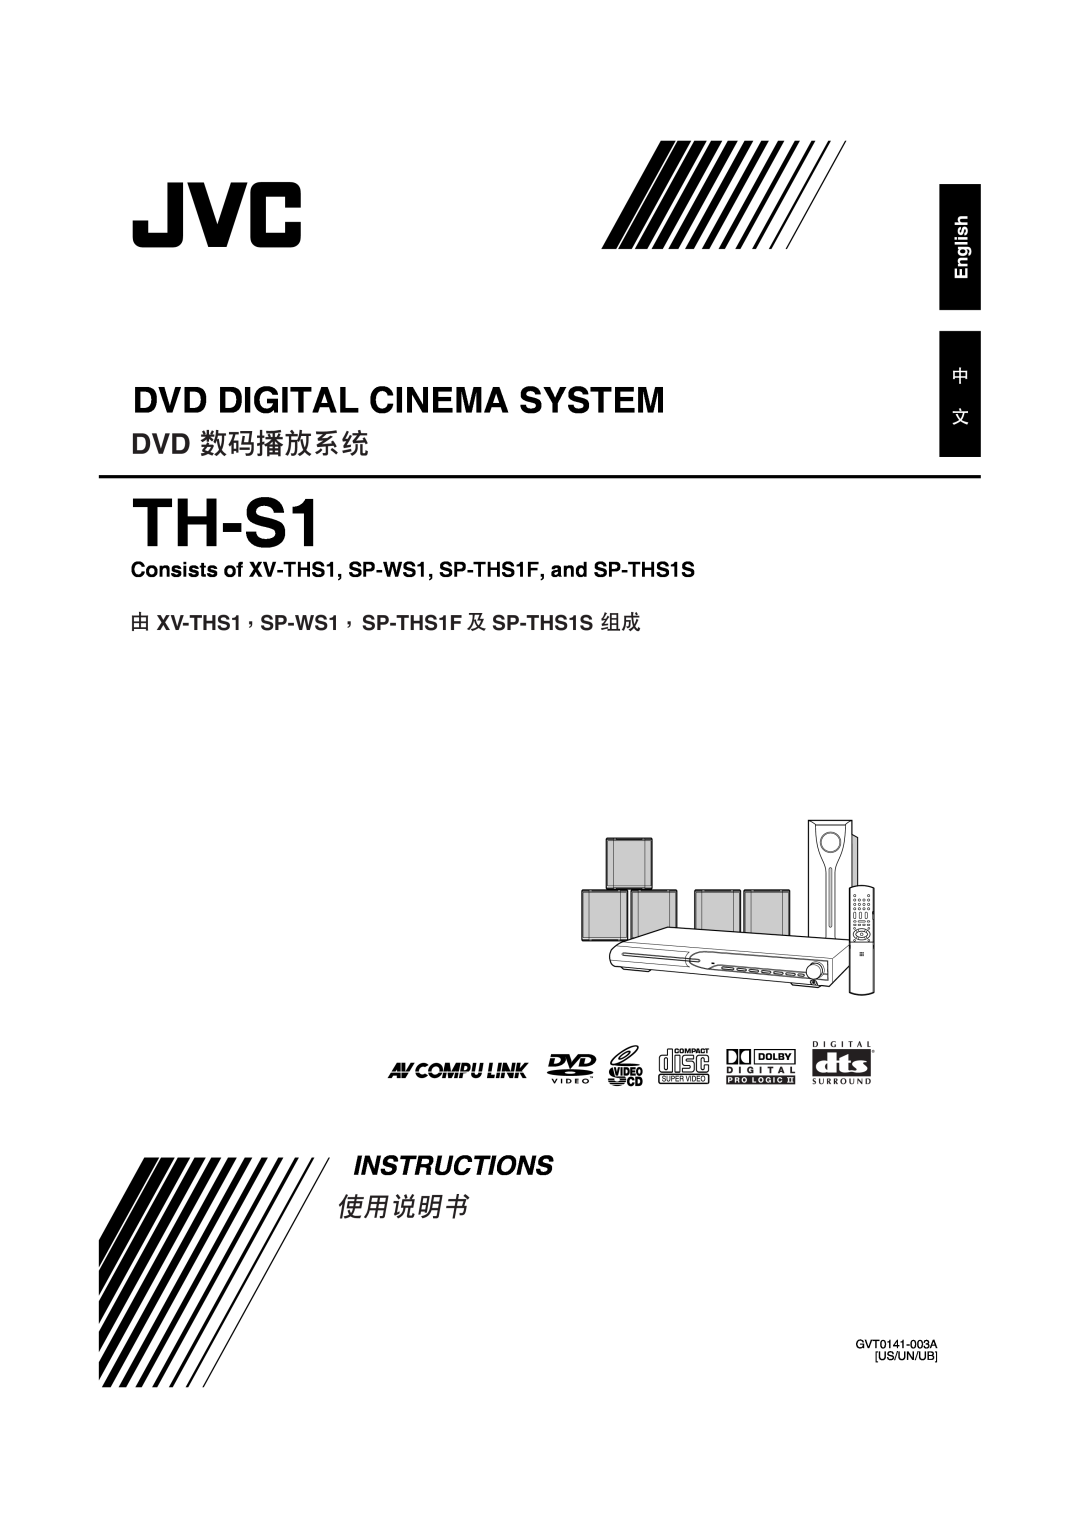 JVC GVT0141-003A manual TH-S1, Dvd Digital Cinema System, Instructions 